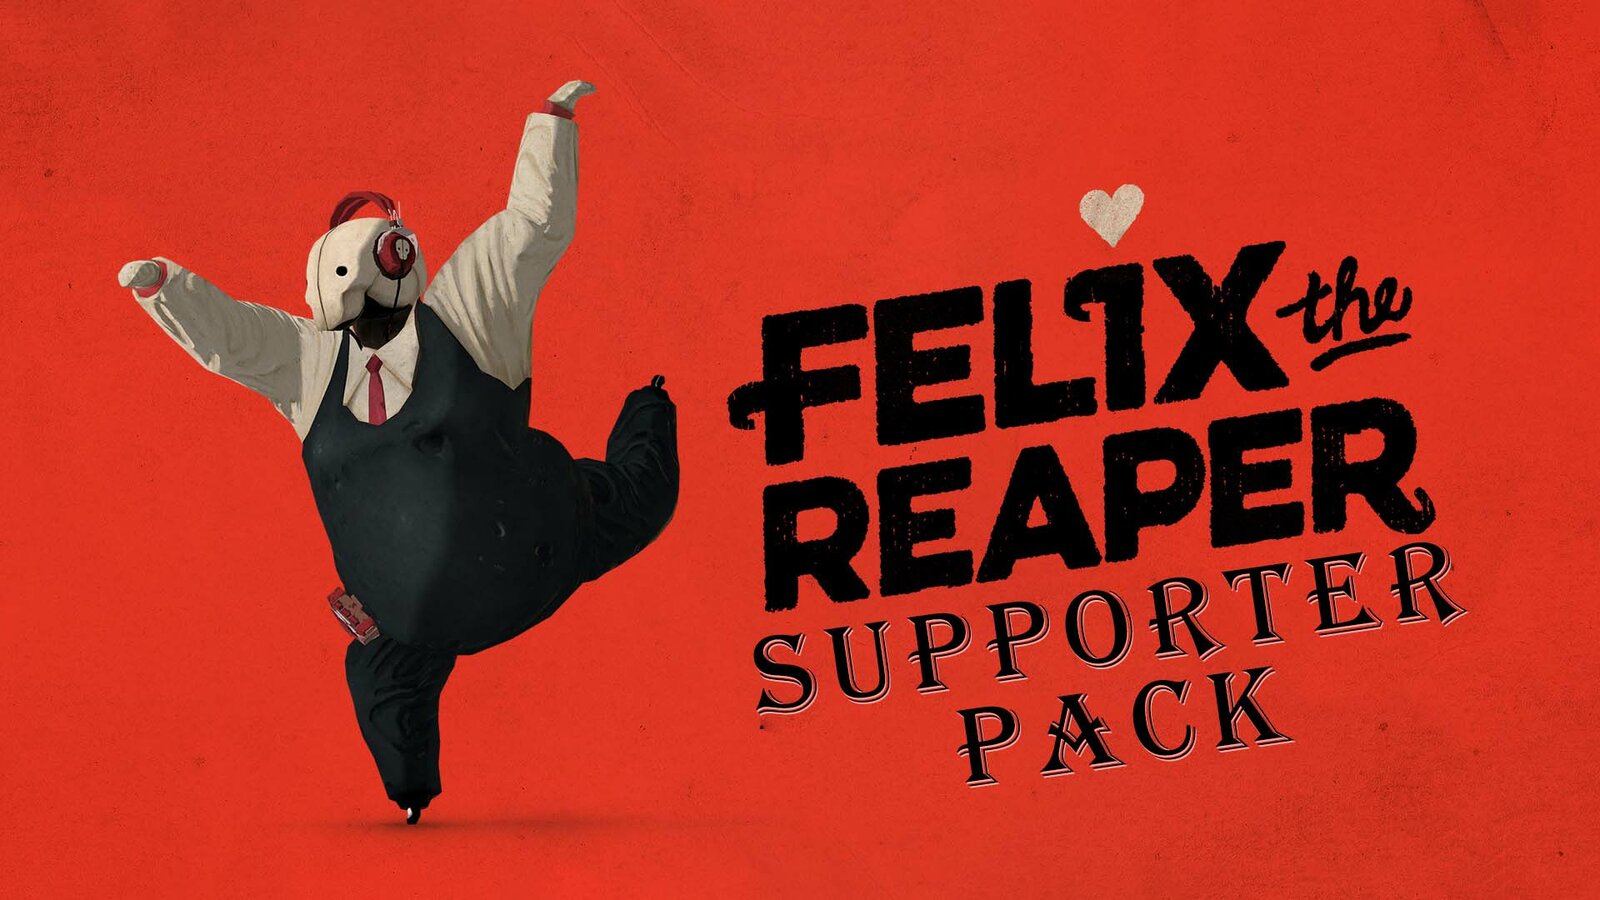 Felix The Reaper - Supporter Pack